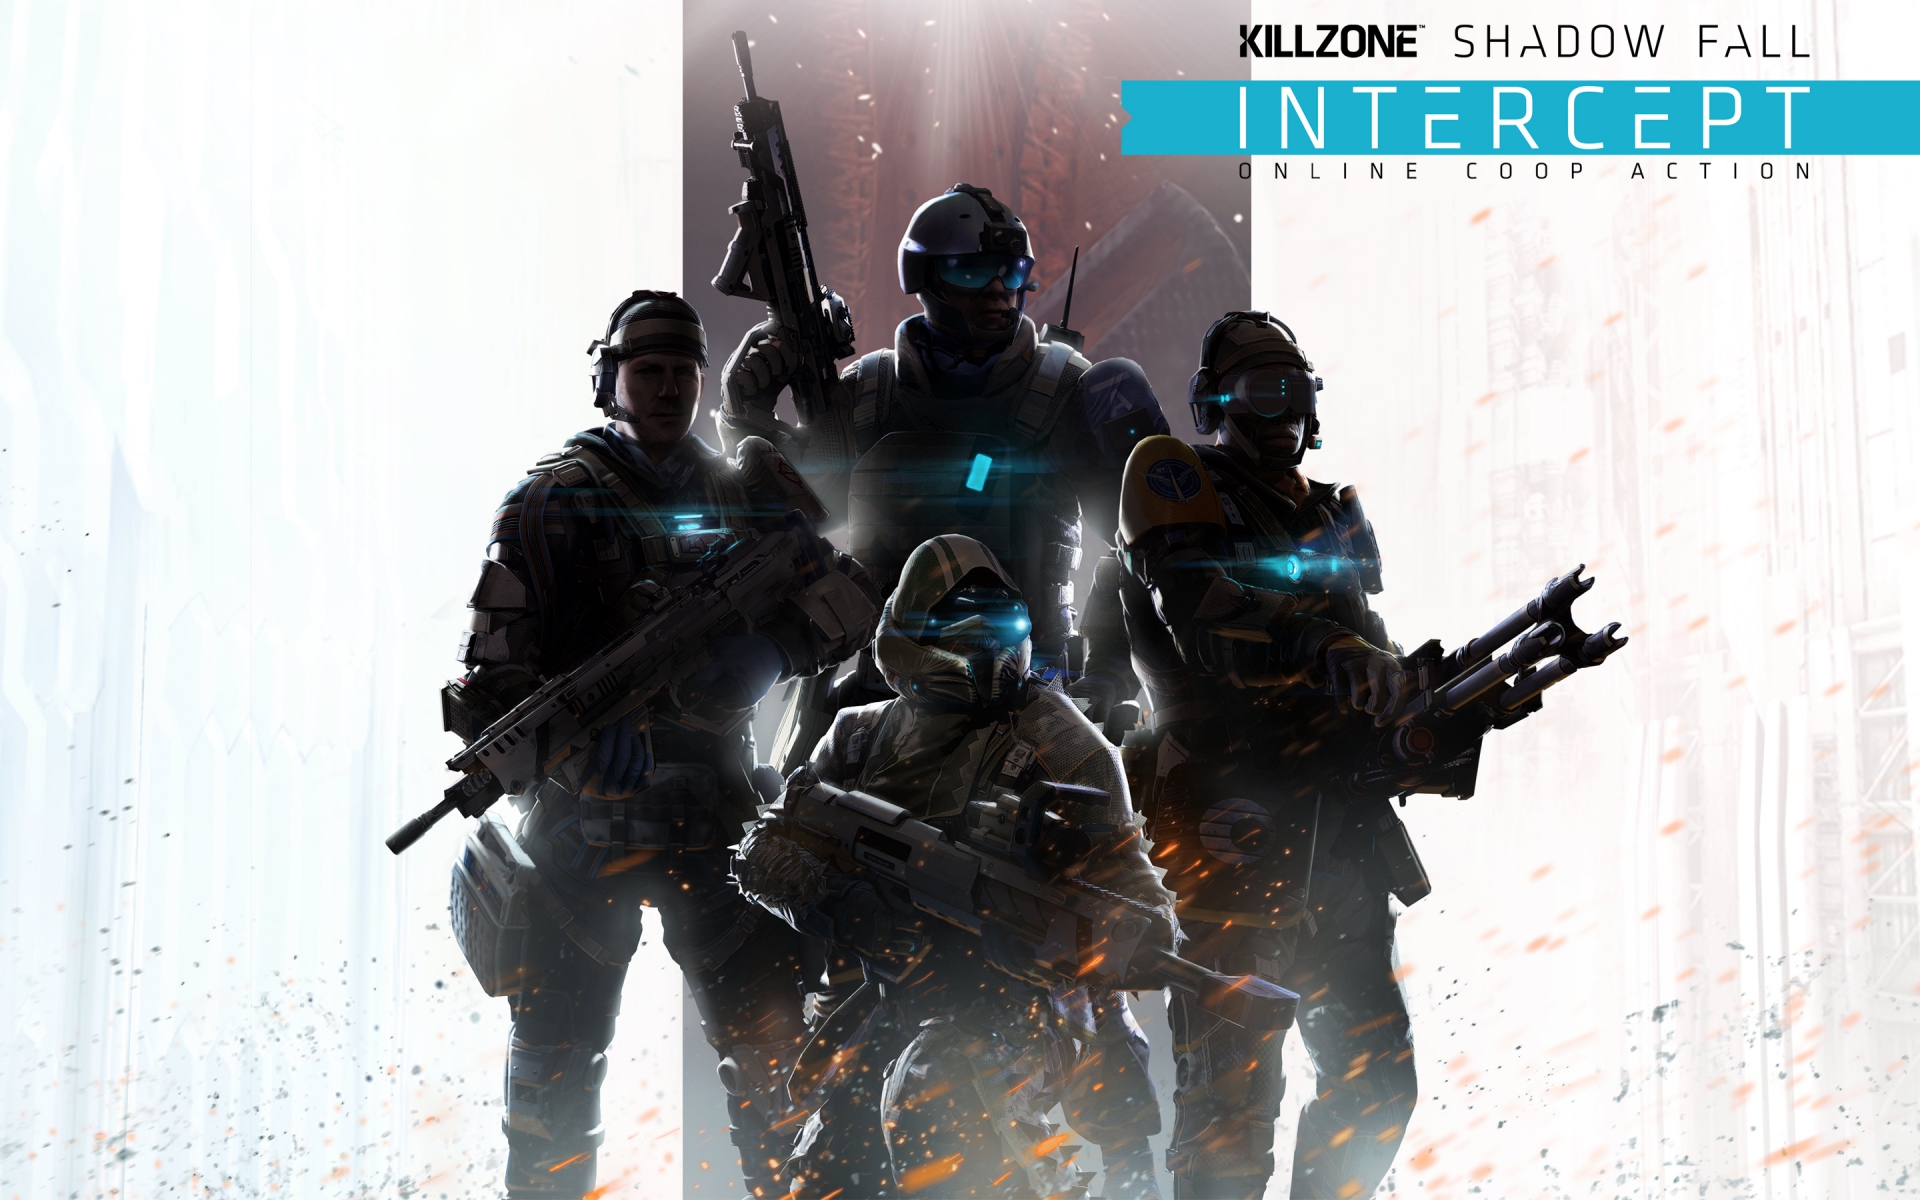    Killzone: Shadow Fall